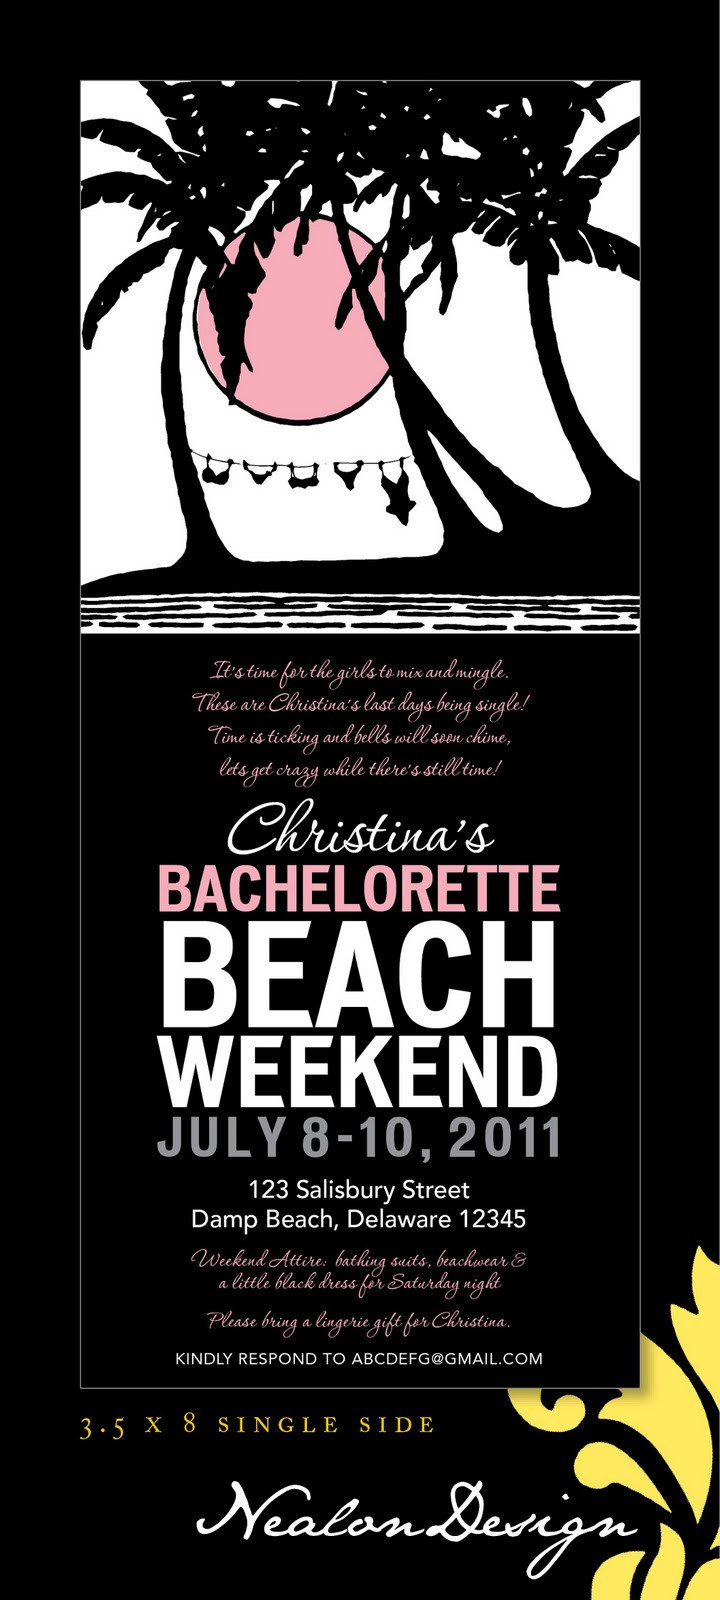 Beach Weekend Bachelorette Party Ideas
 Atl Bachelorette Resource